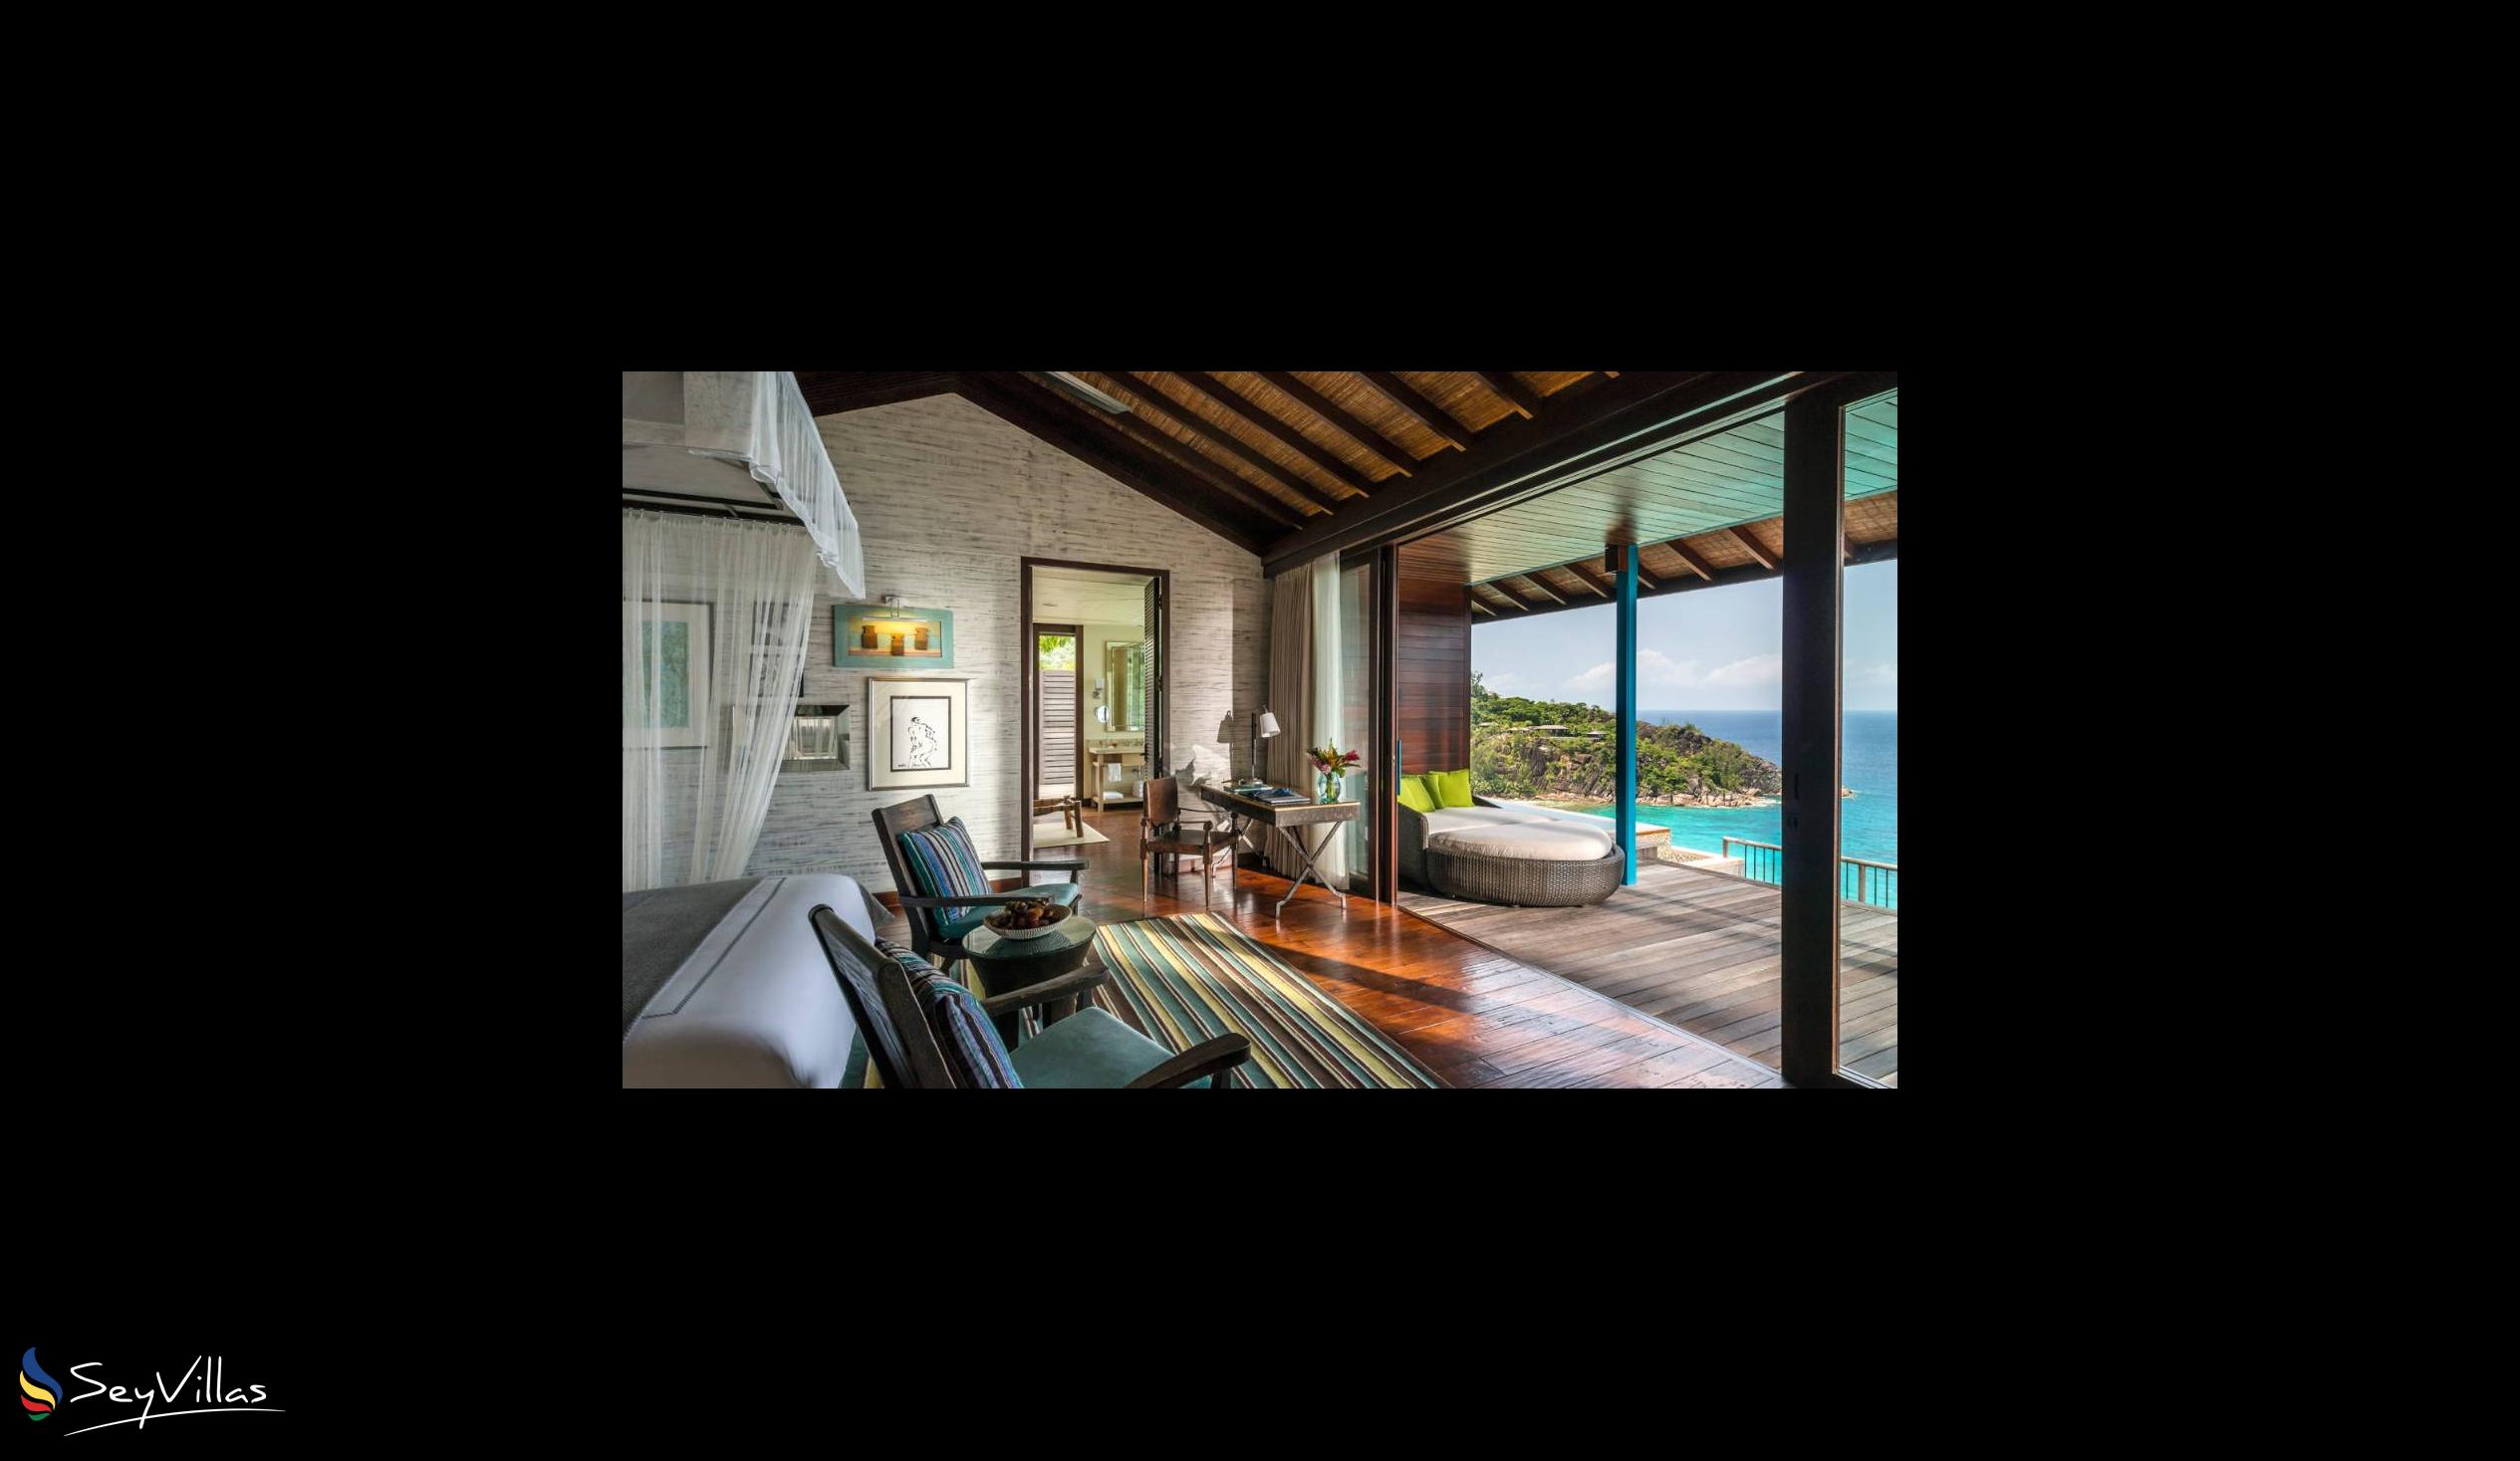 Photo 52: Four Seasons Resort - Serenity Villa - Mahé (Seychelles)